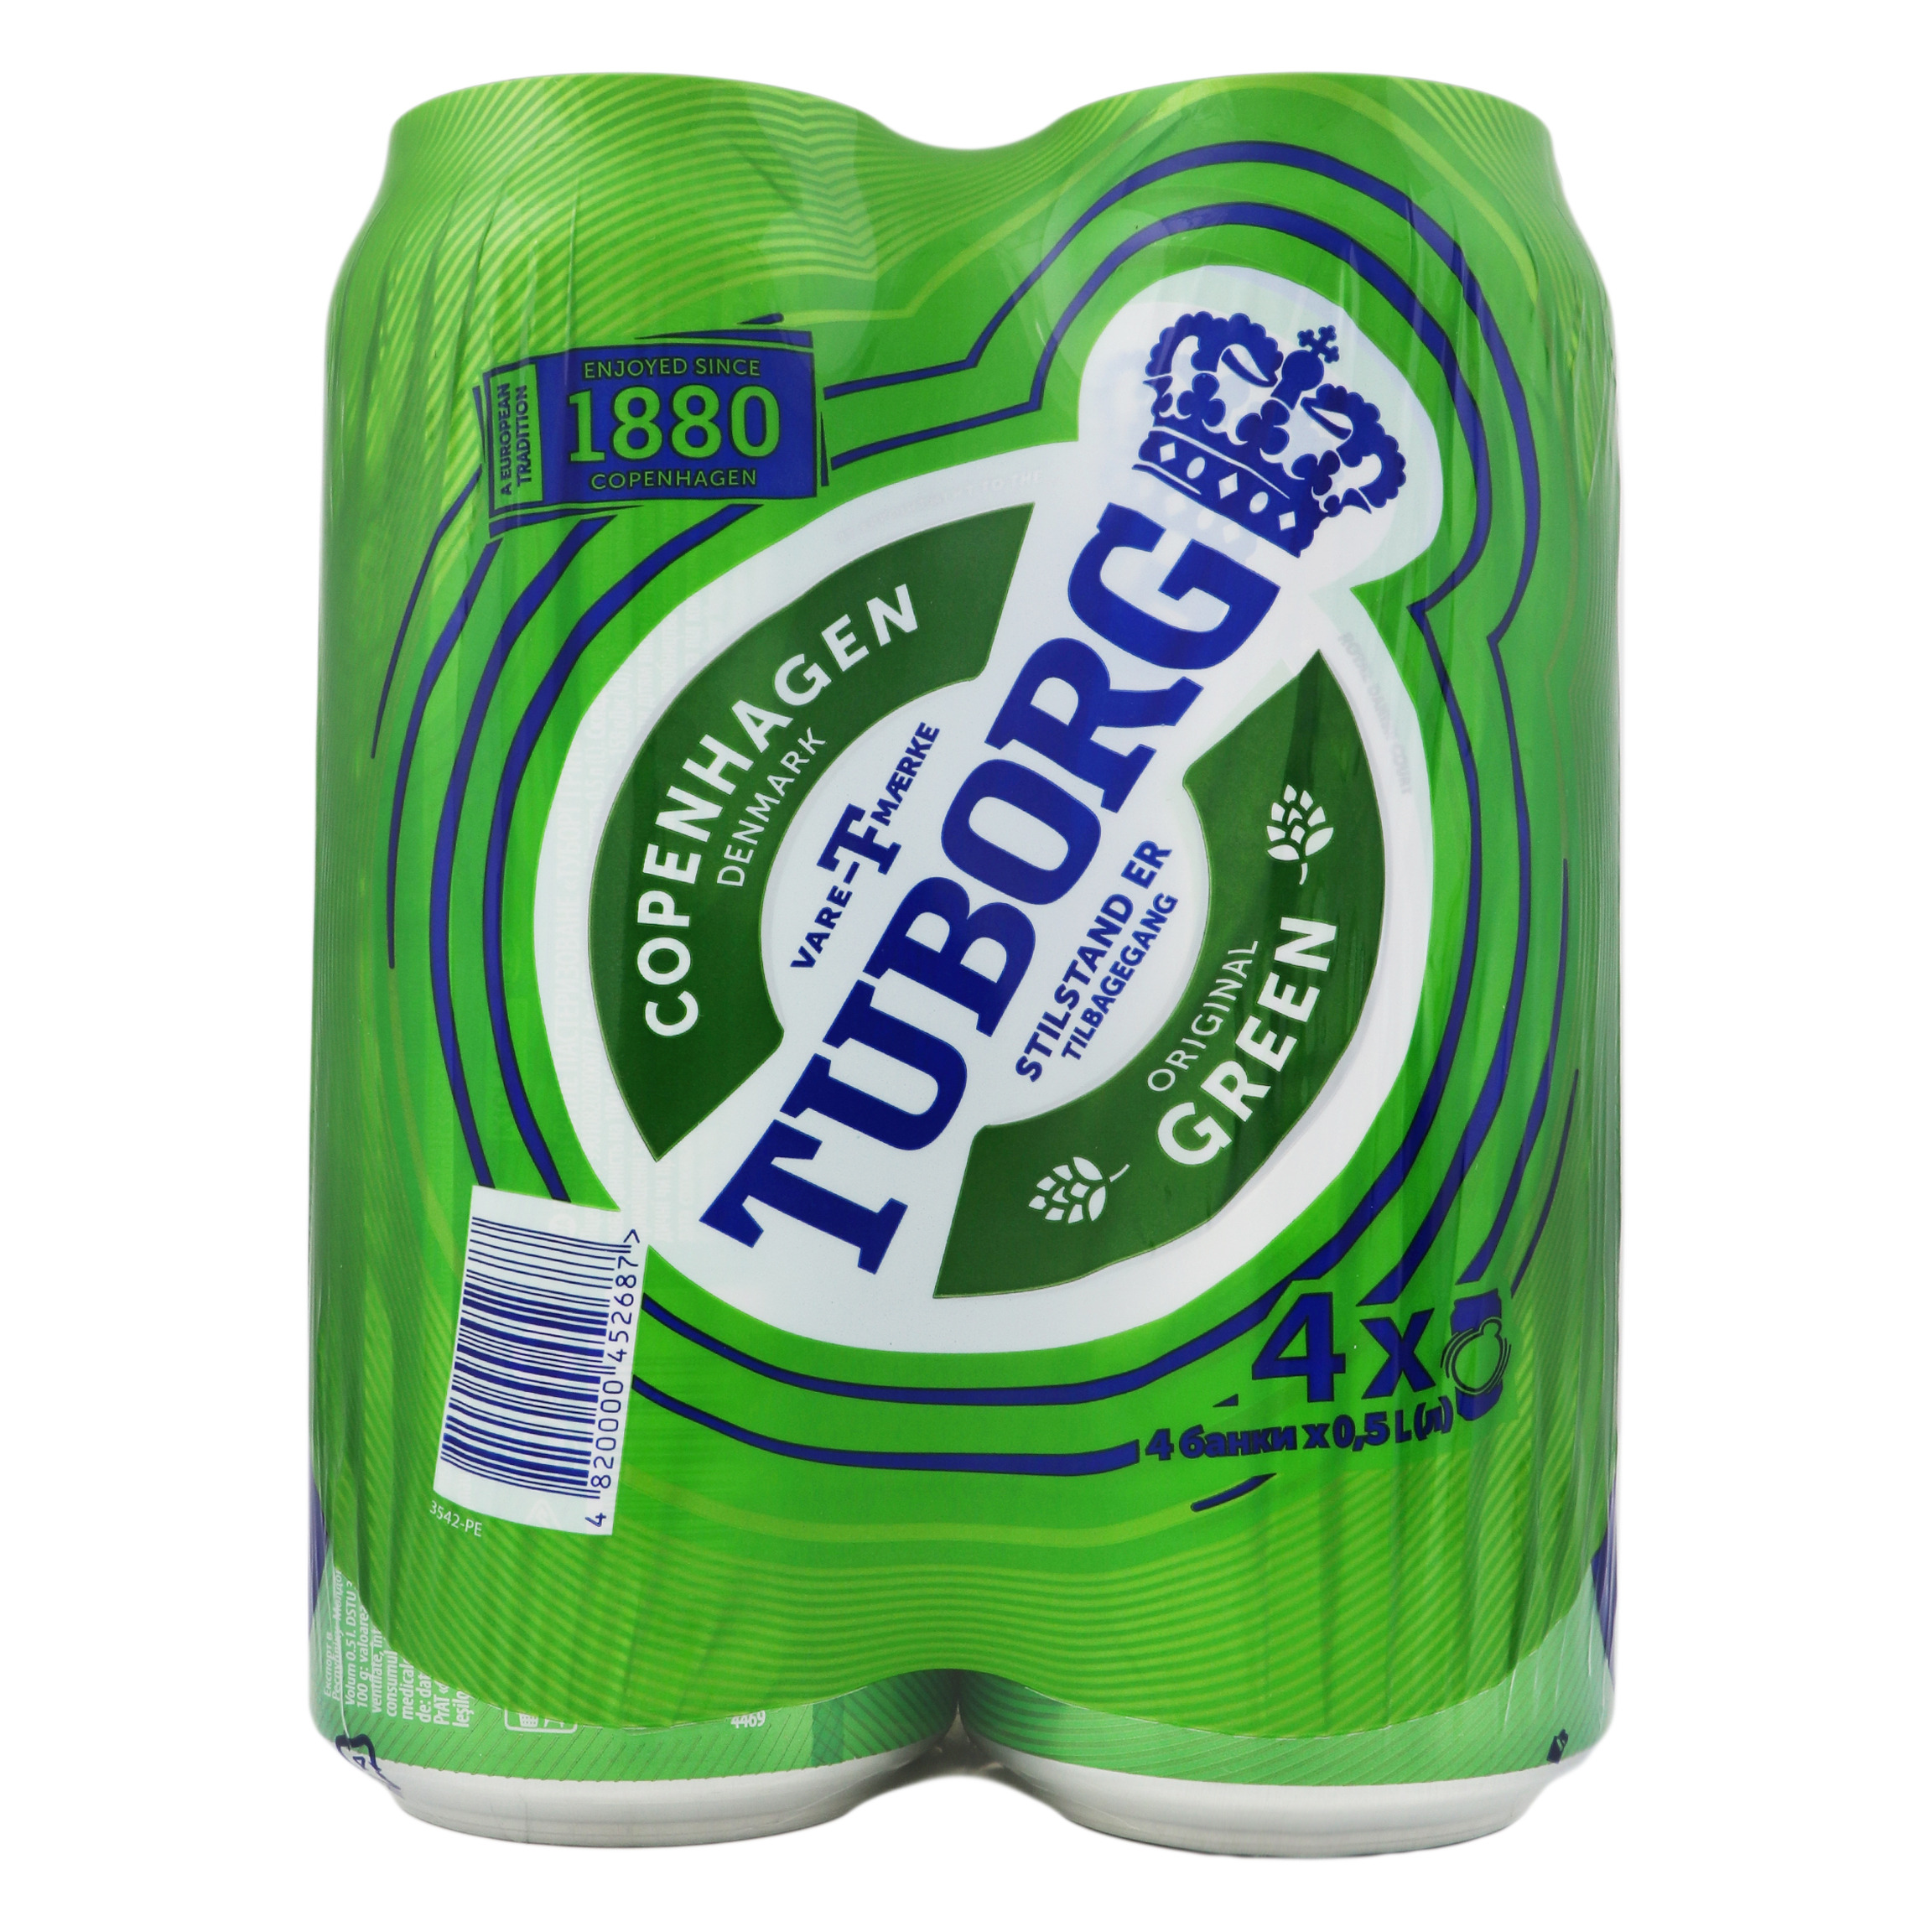 Set of beer Tuborg Green light 4,6% 4 * 0,5l can